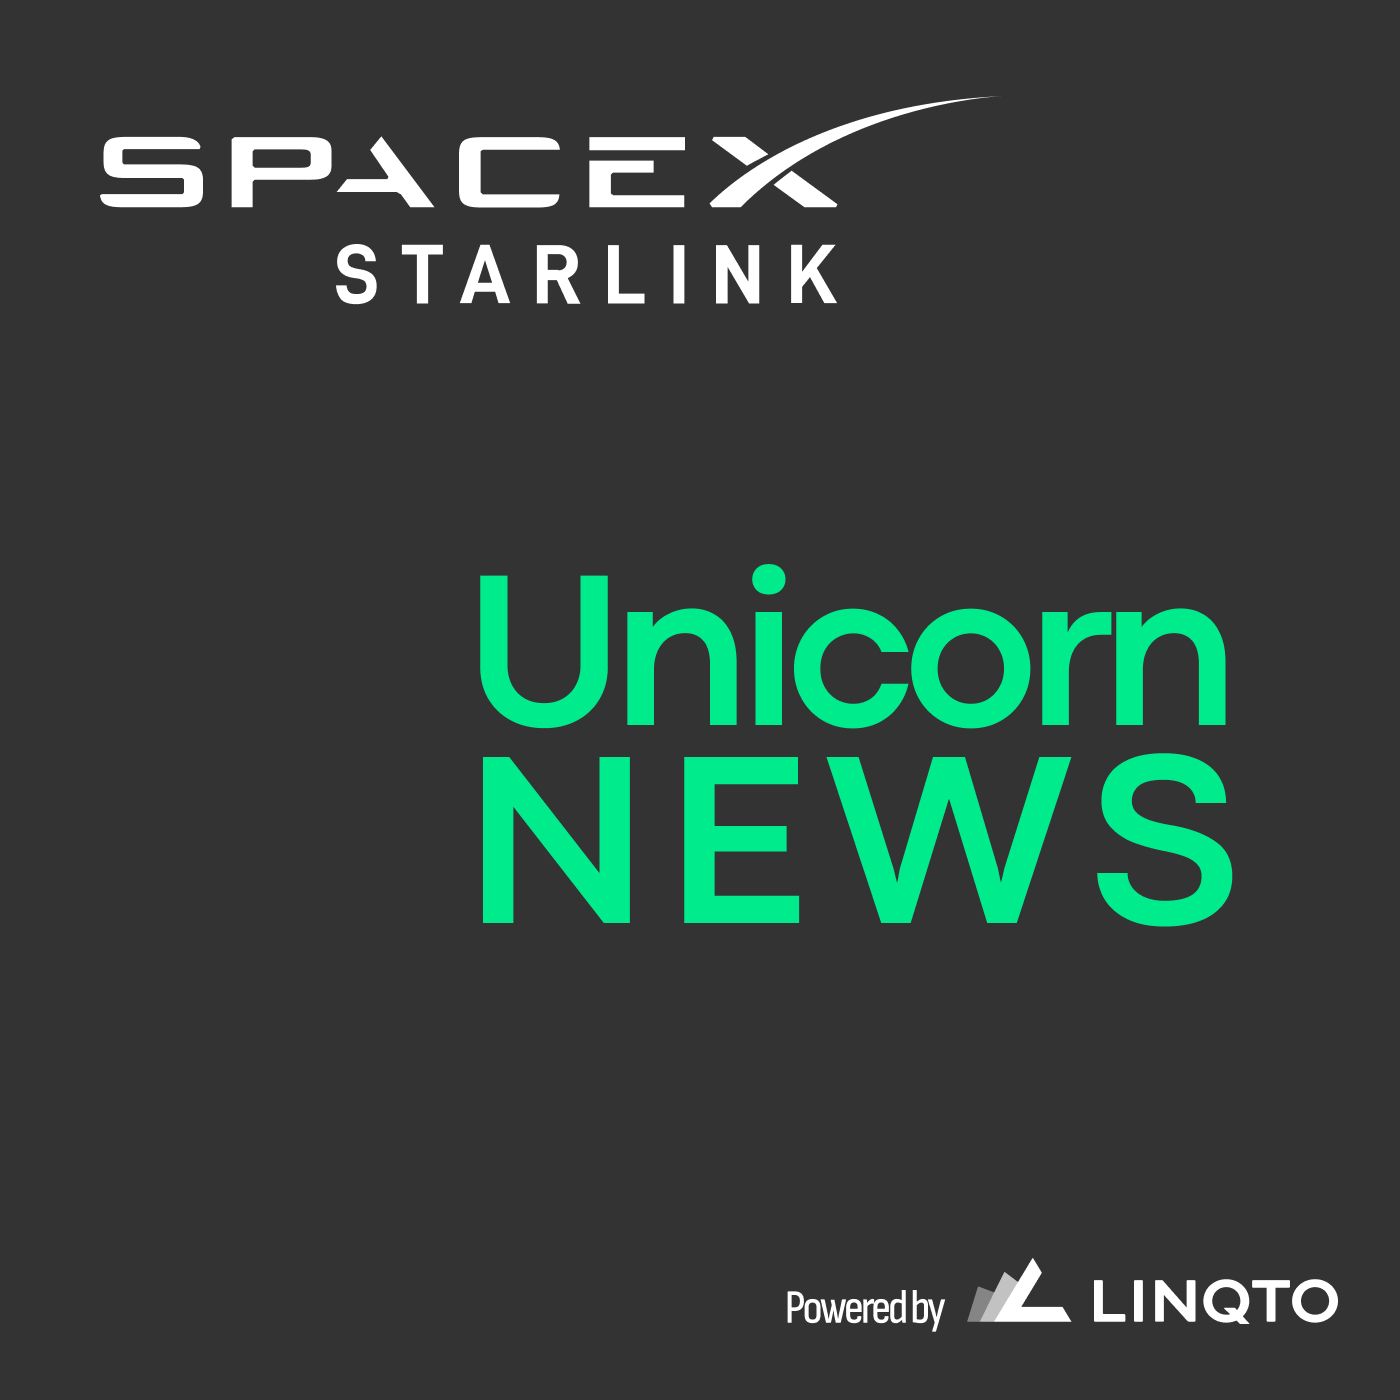 SpaceX Unicorn News